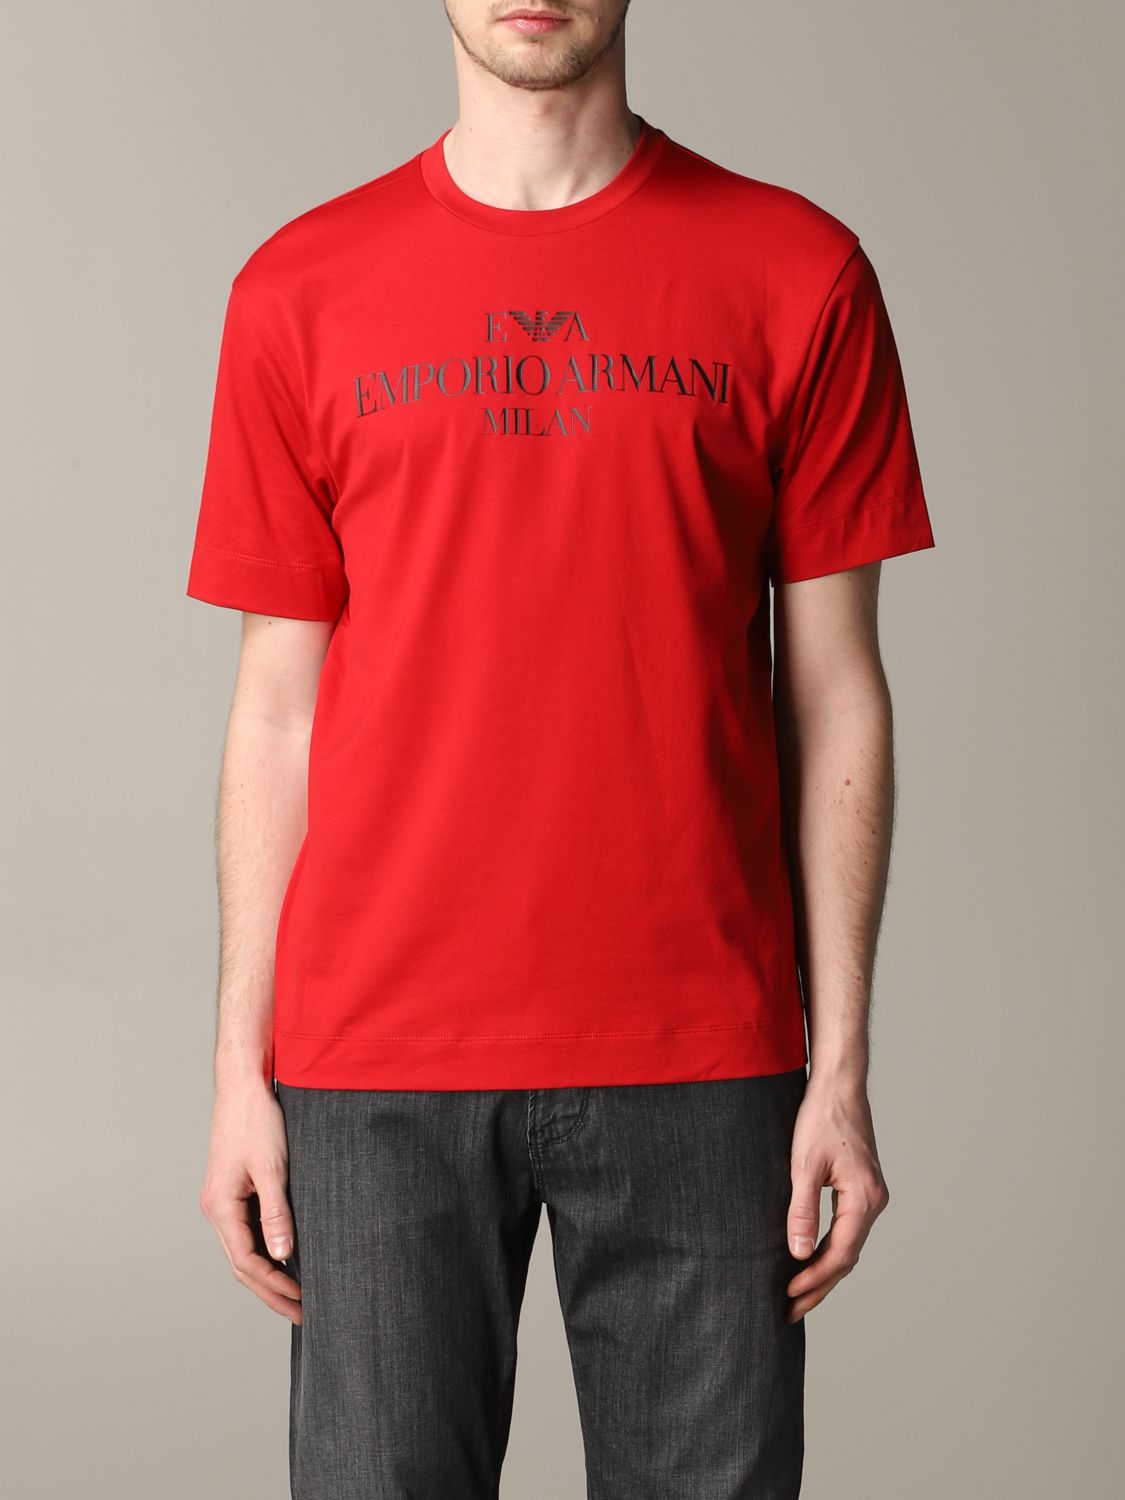 EMPORIO ARMANI: t-shirt for man - Red | Emporio Armani t-shirt 3H1TN1 ...